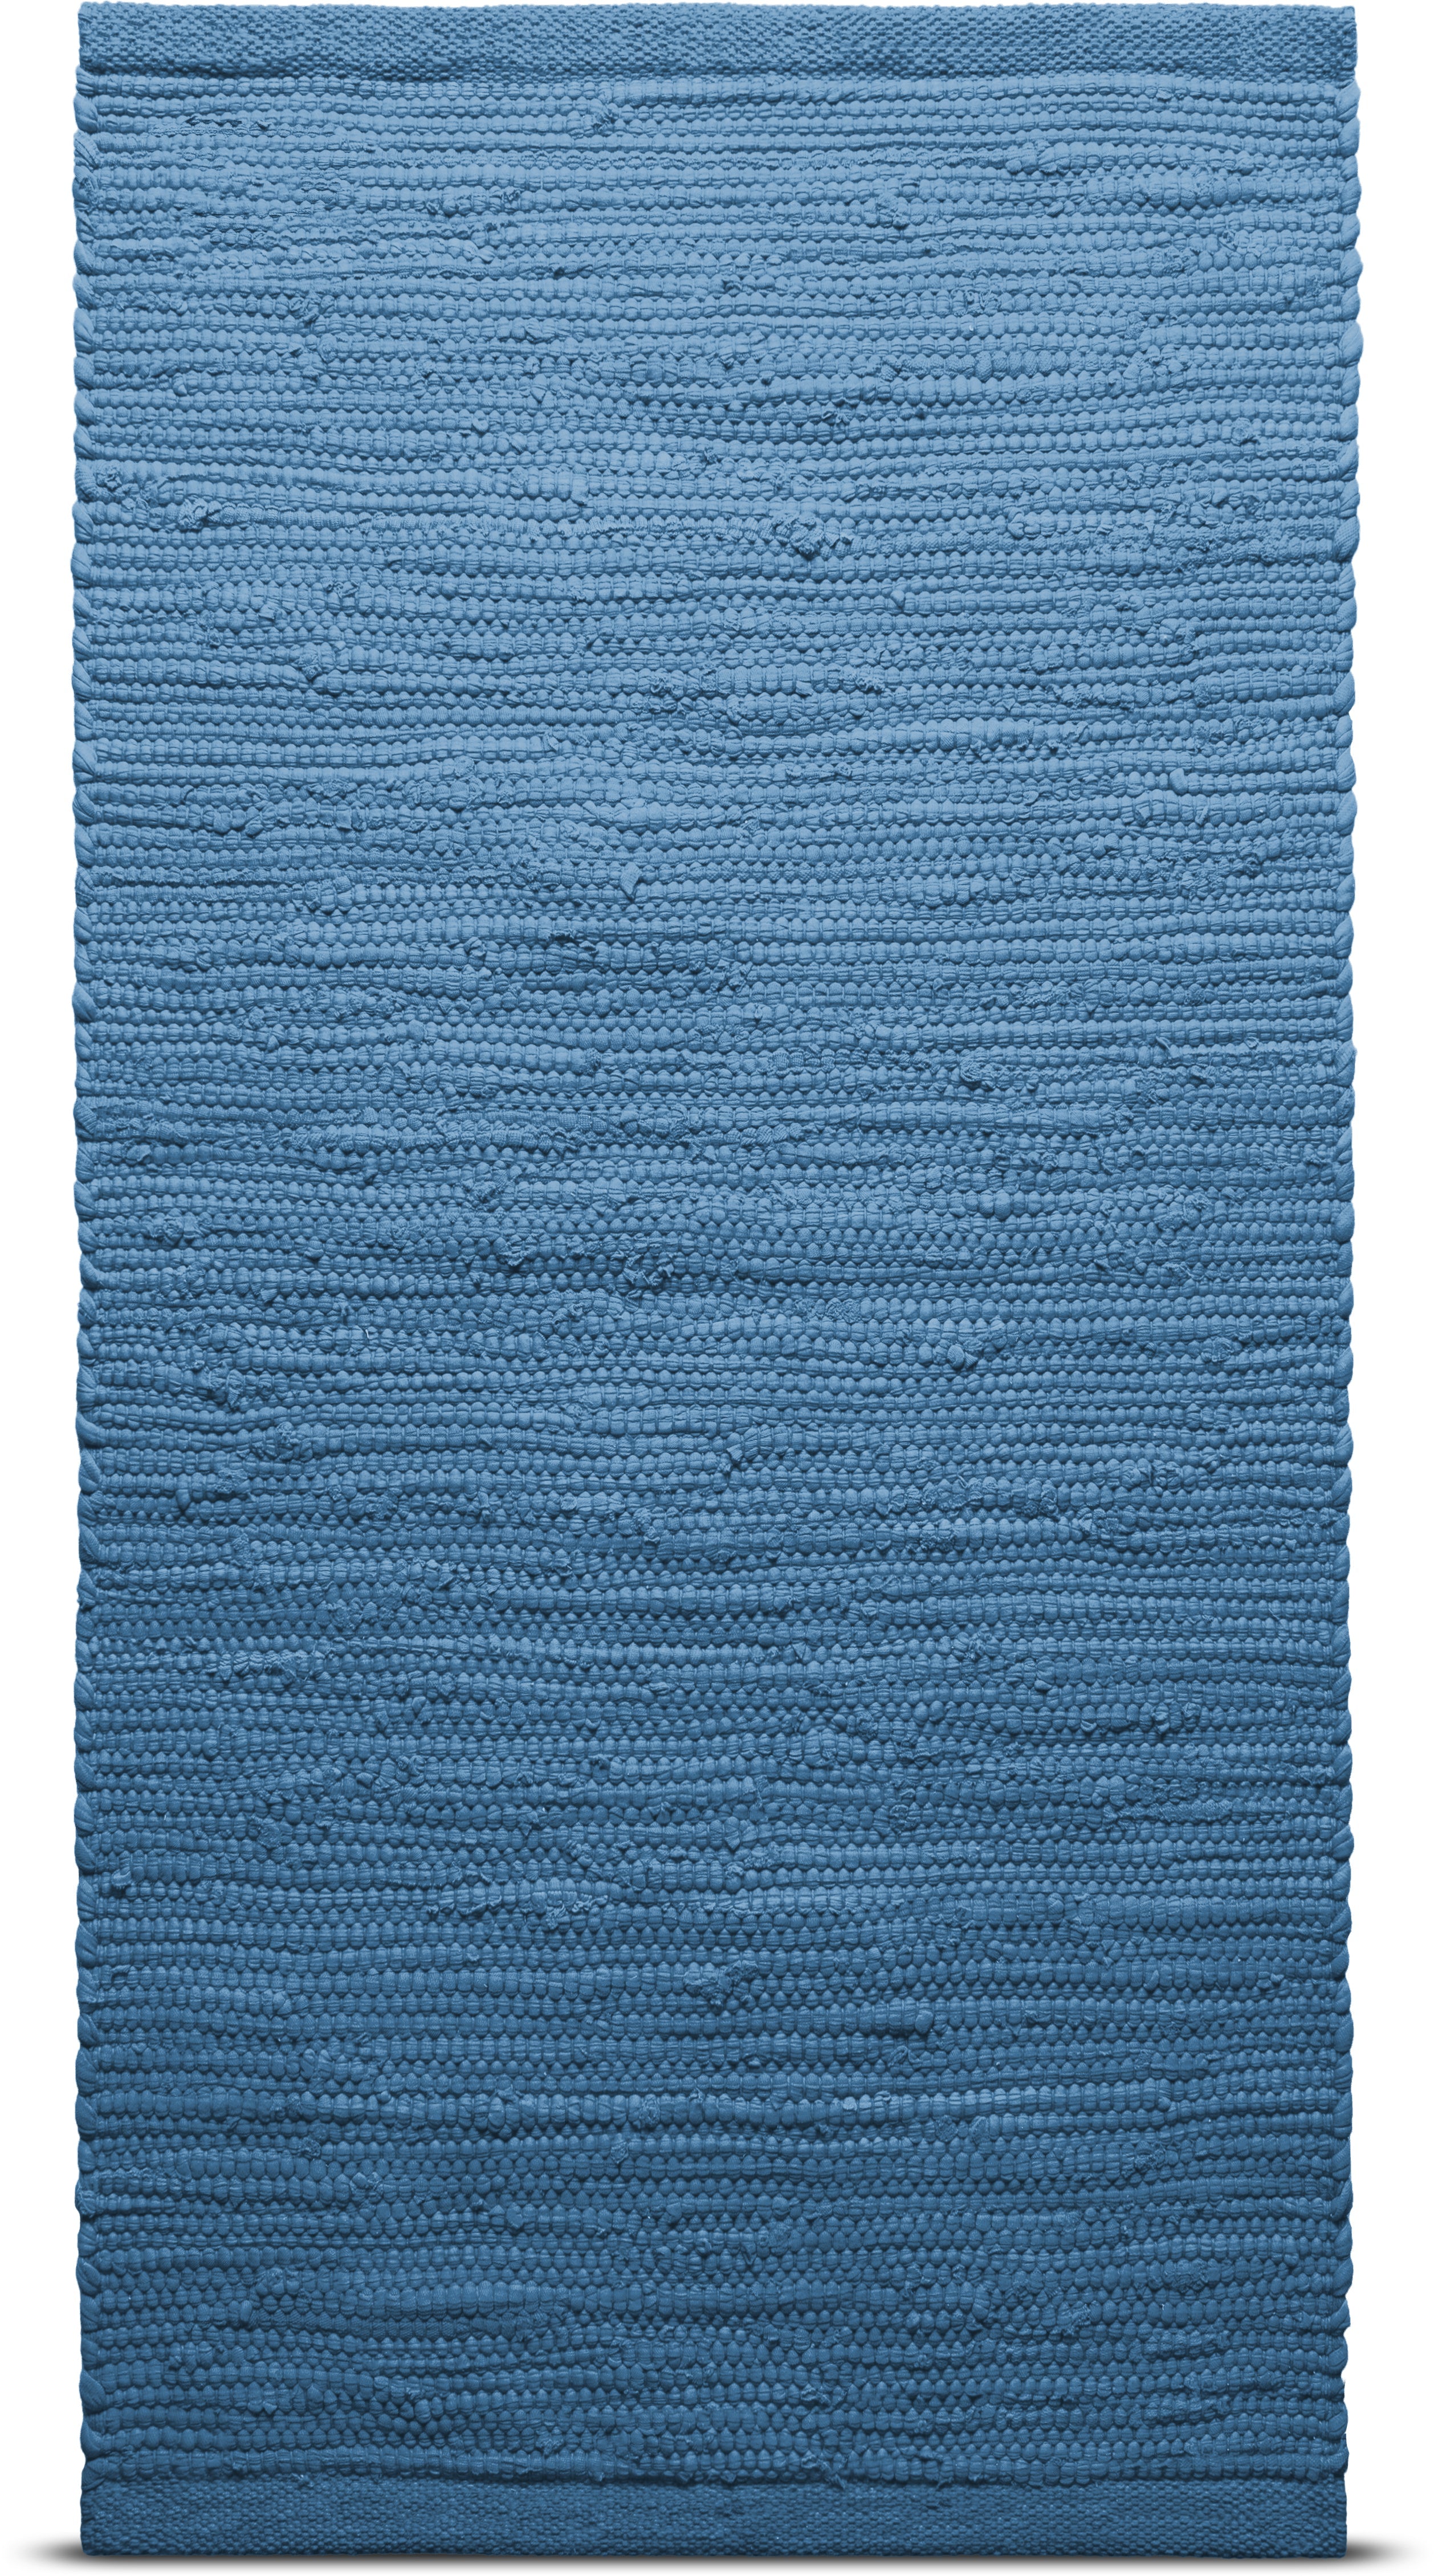 Koberec pevnou bavlněnou koberec 170 x 240 cm, Pacifik